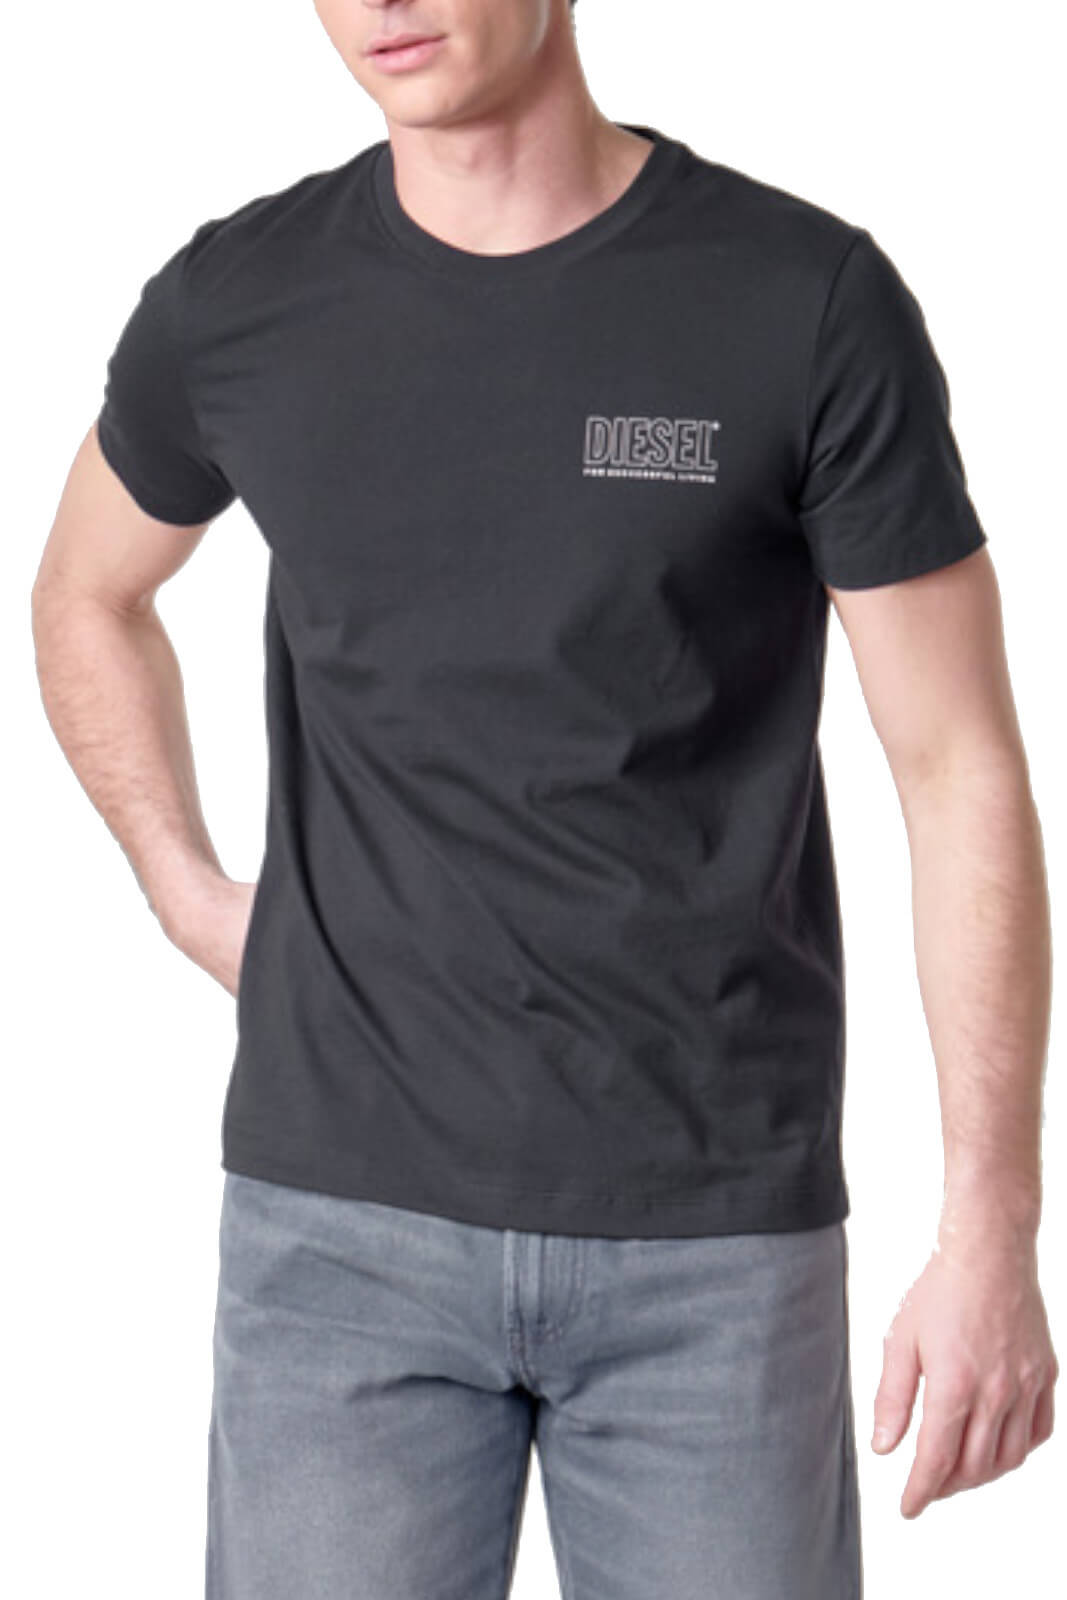 Diesel Men's T shirt with logo